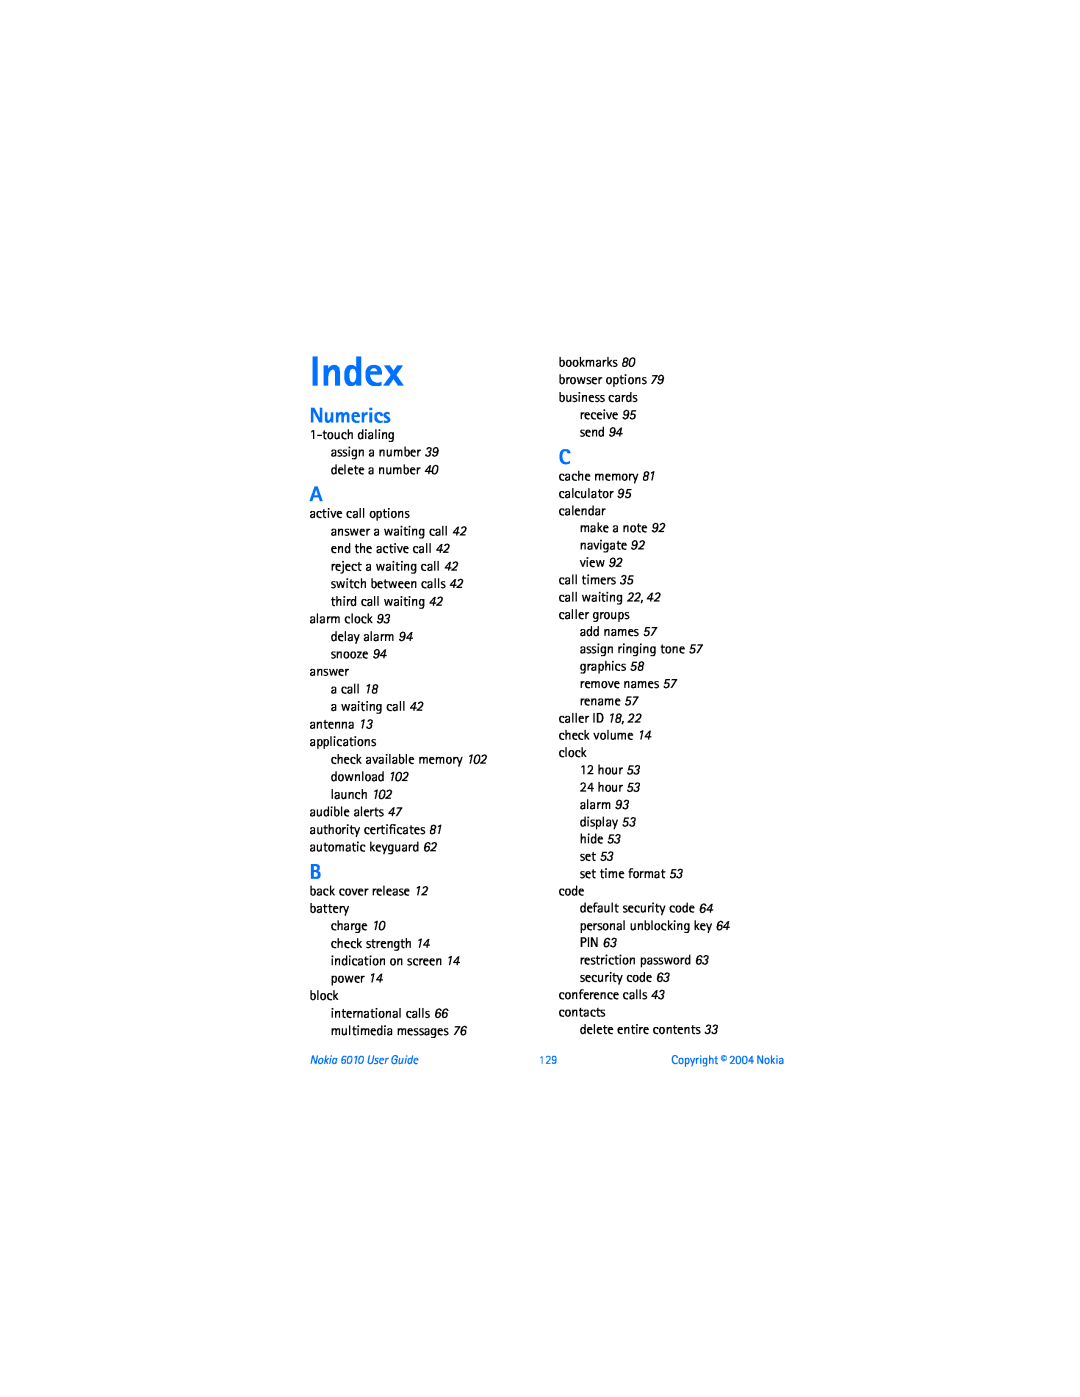 Nokia 6010 warranty Index, Numerics 